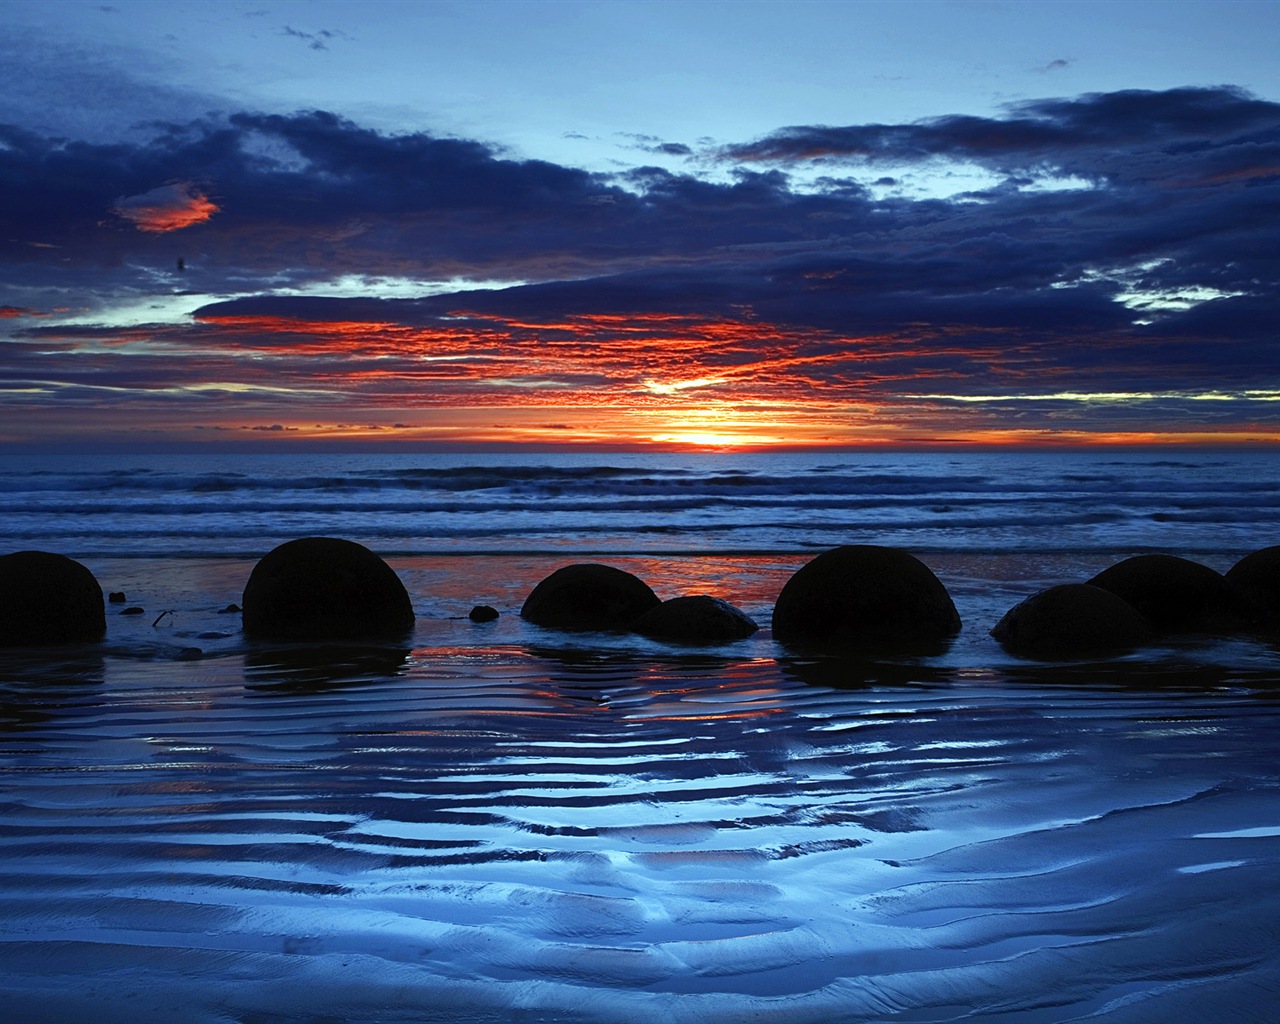 Windows 8 theme wallpaper: Beach sunrise and sunset views #14 - 1280x1024